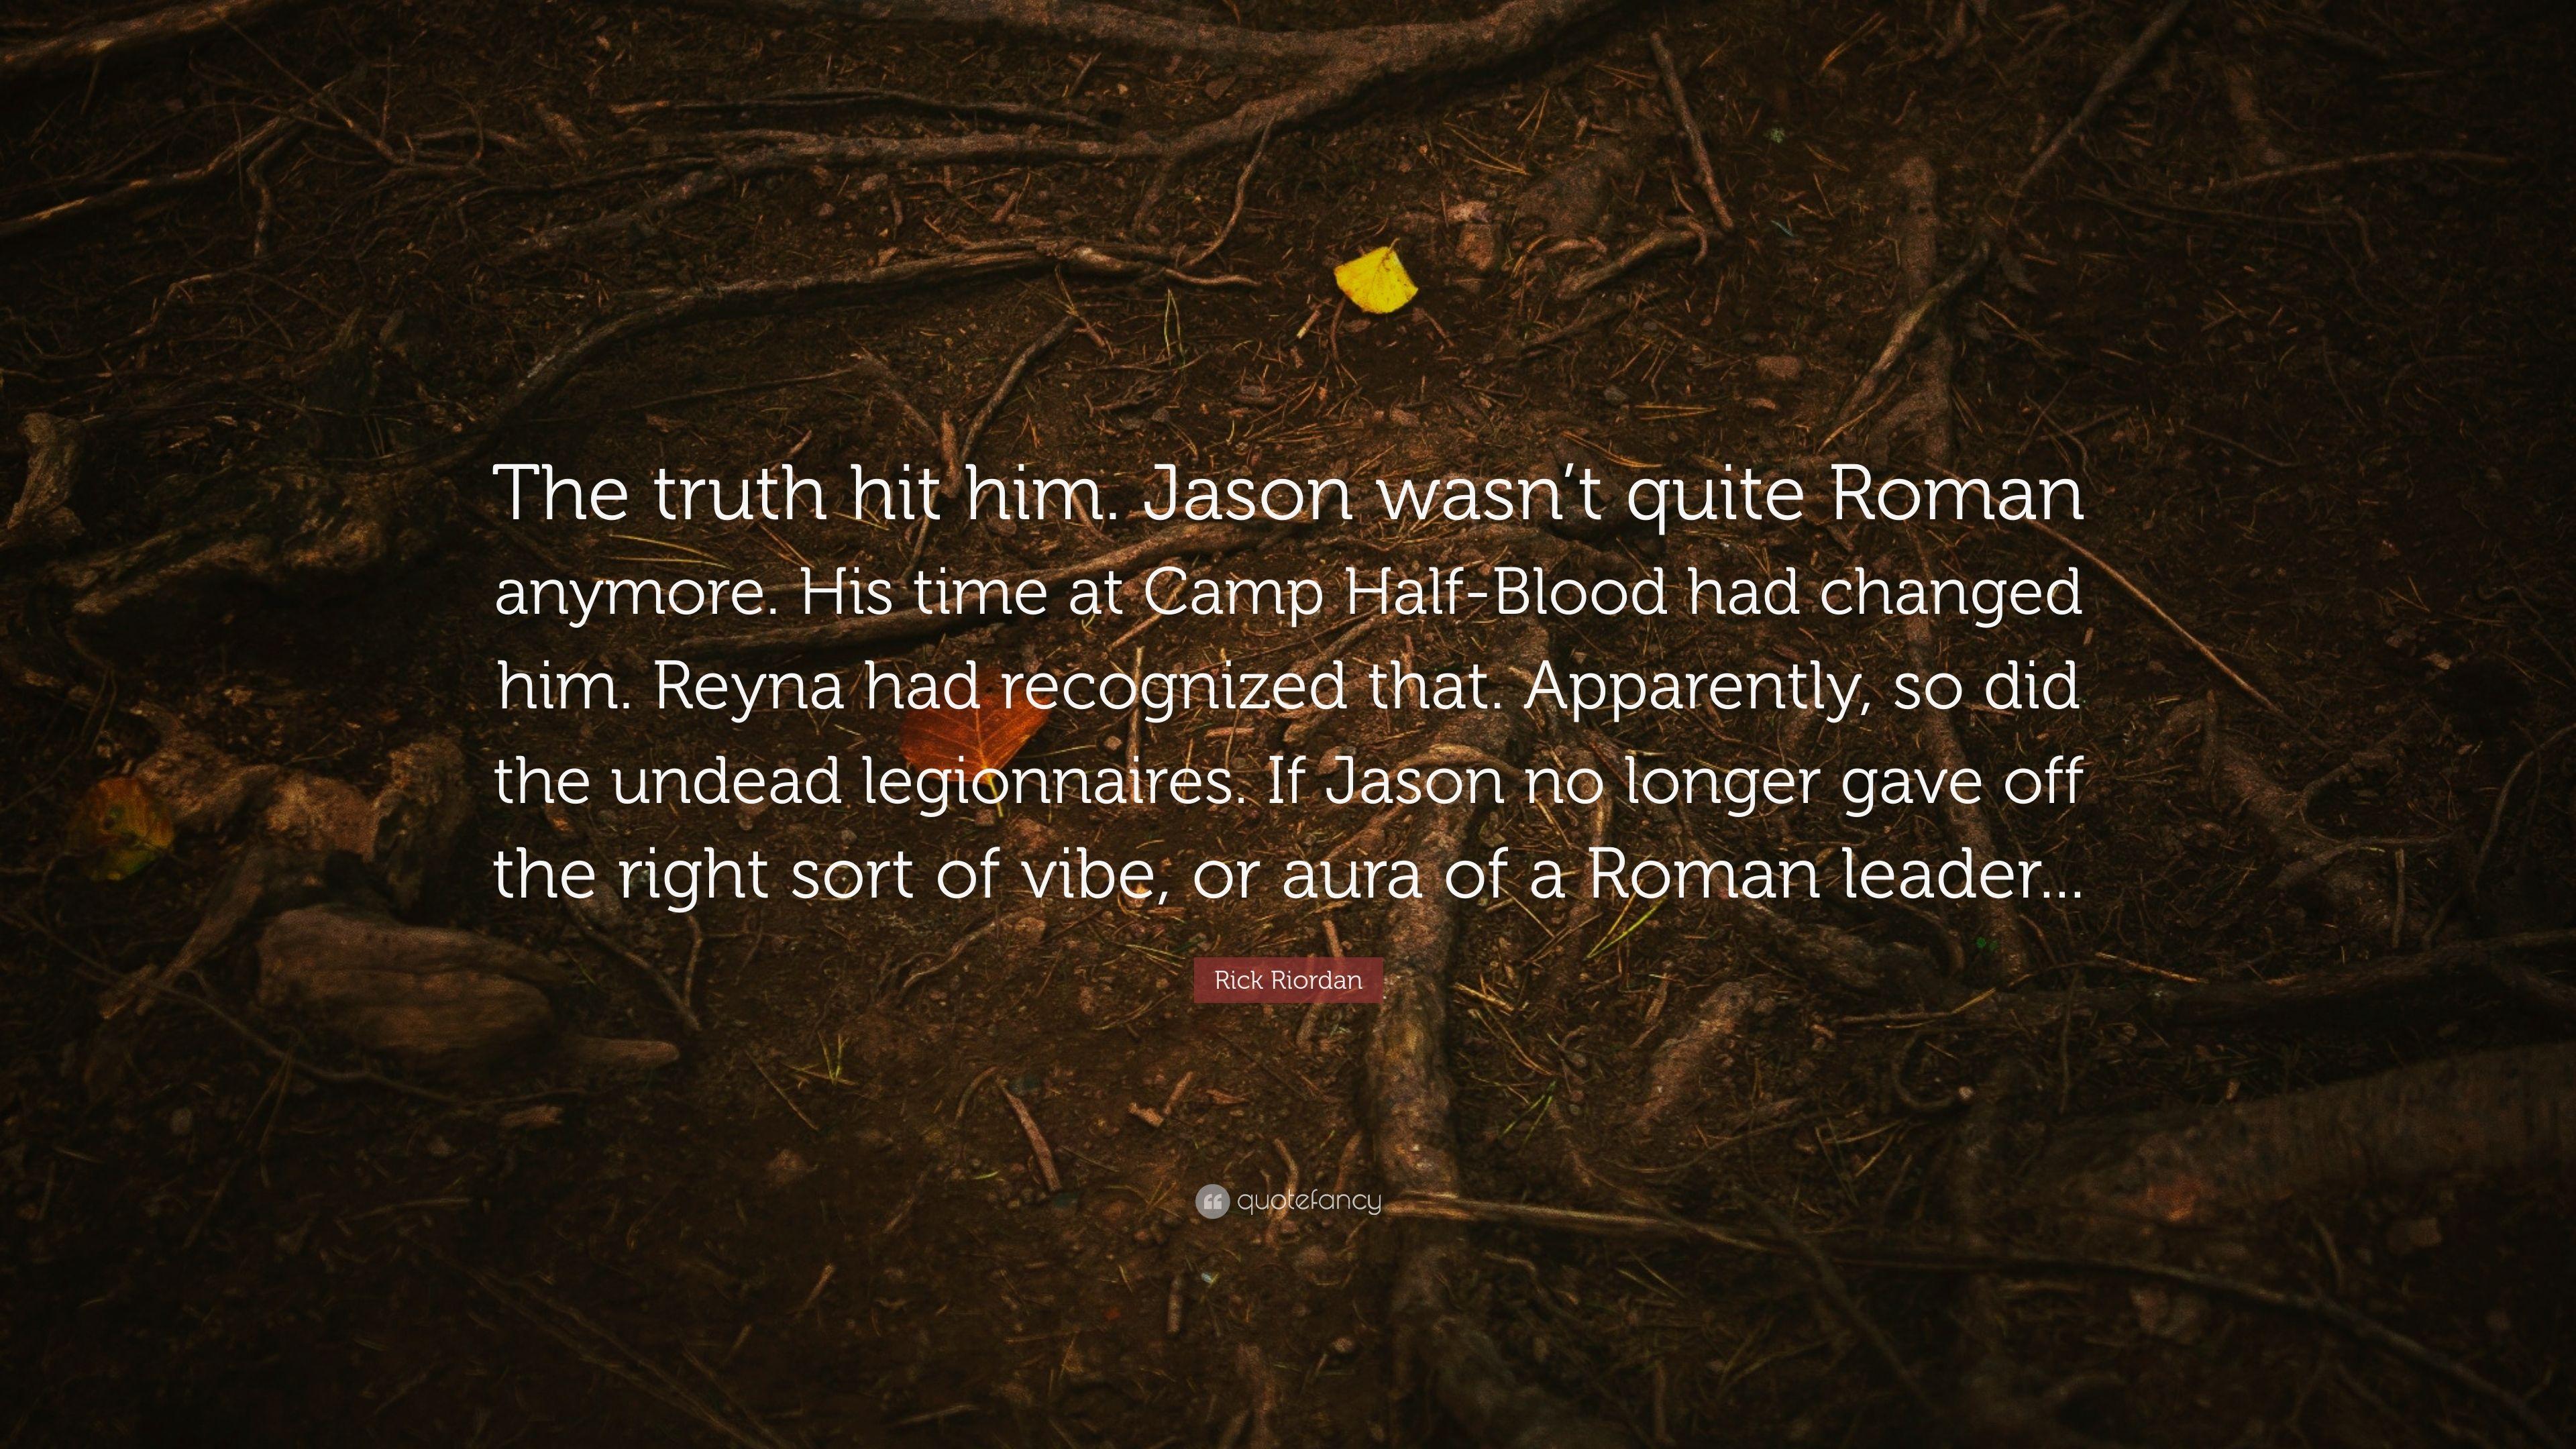 Rick Riordan Quote: “The truth hit him. Jason wasn't quite Roman